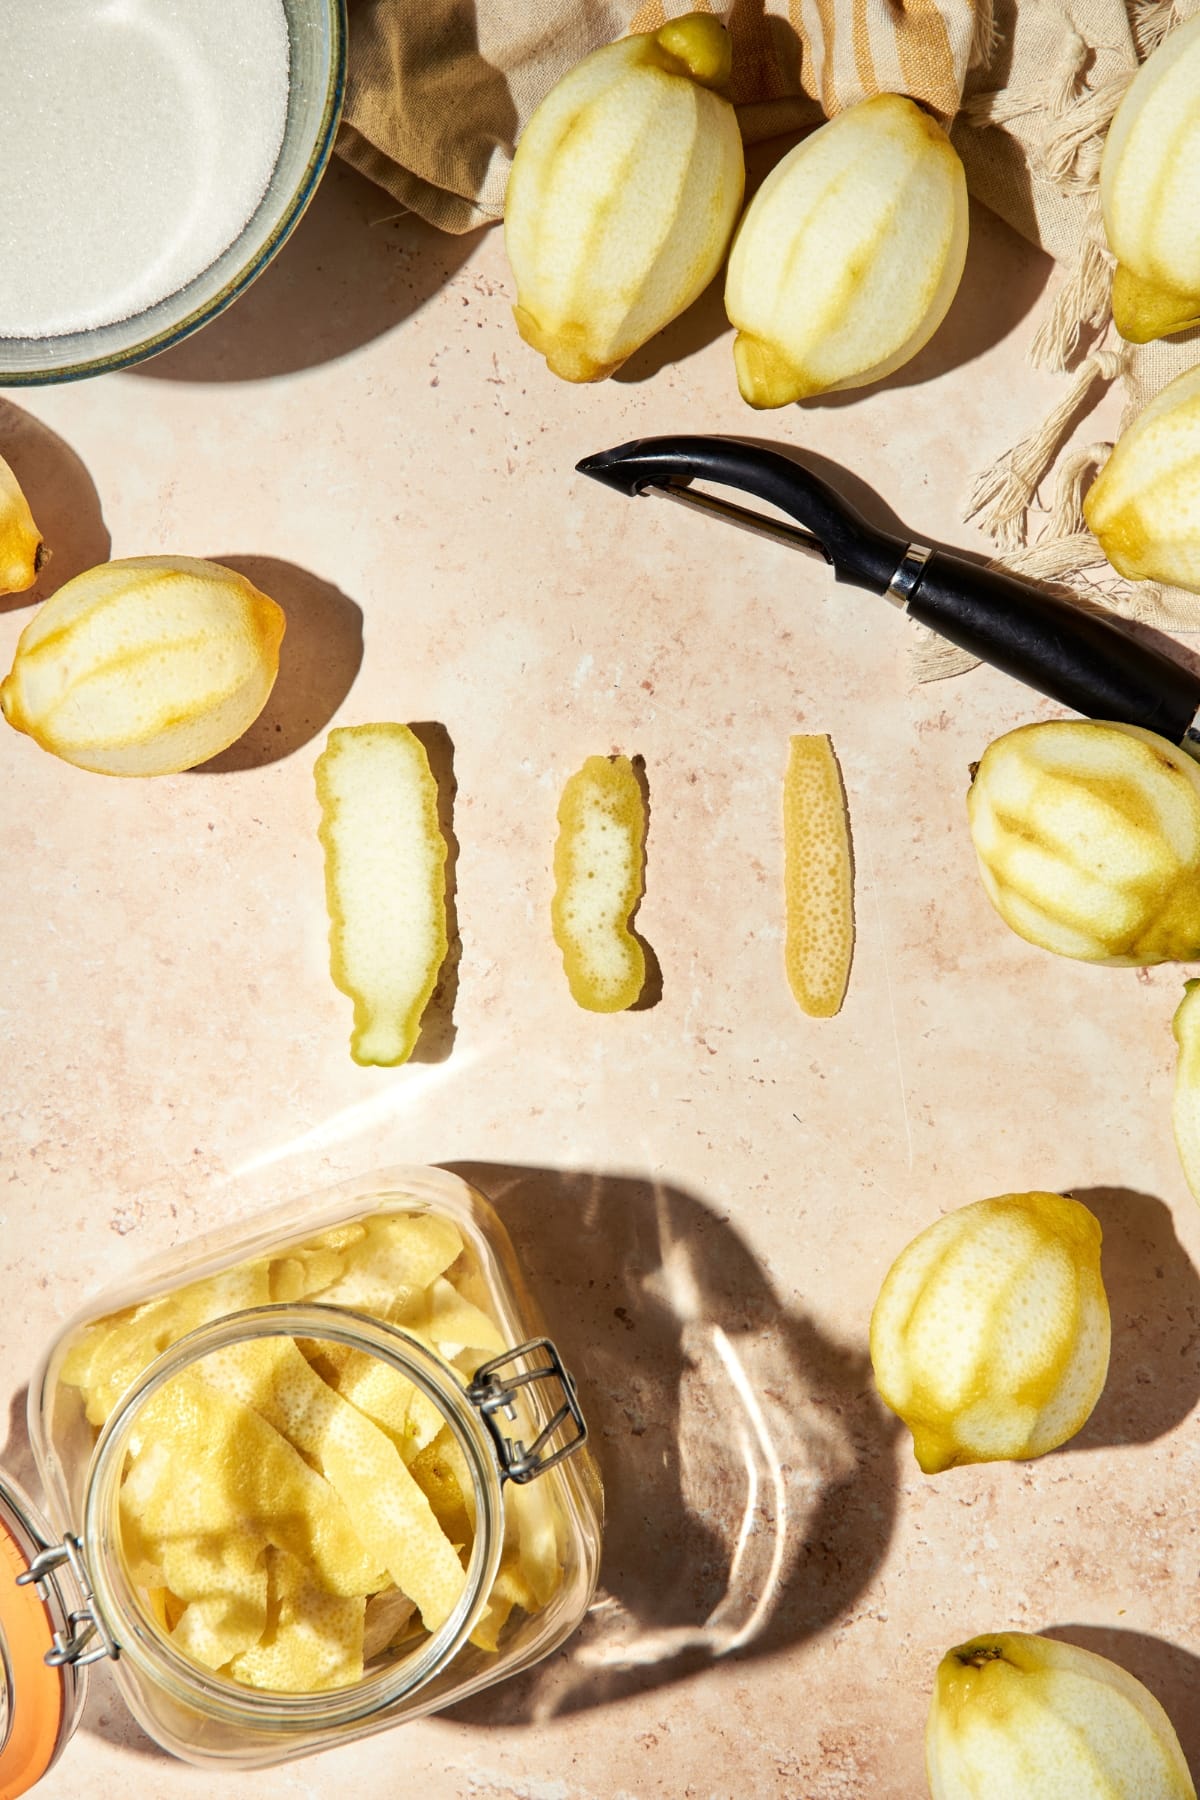 how to peel lemons for limoncello the correct way